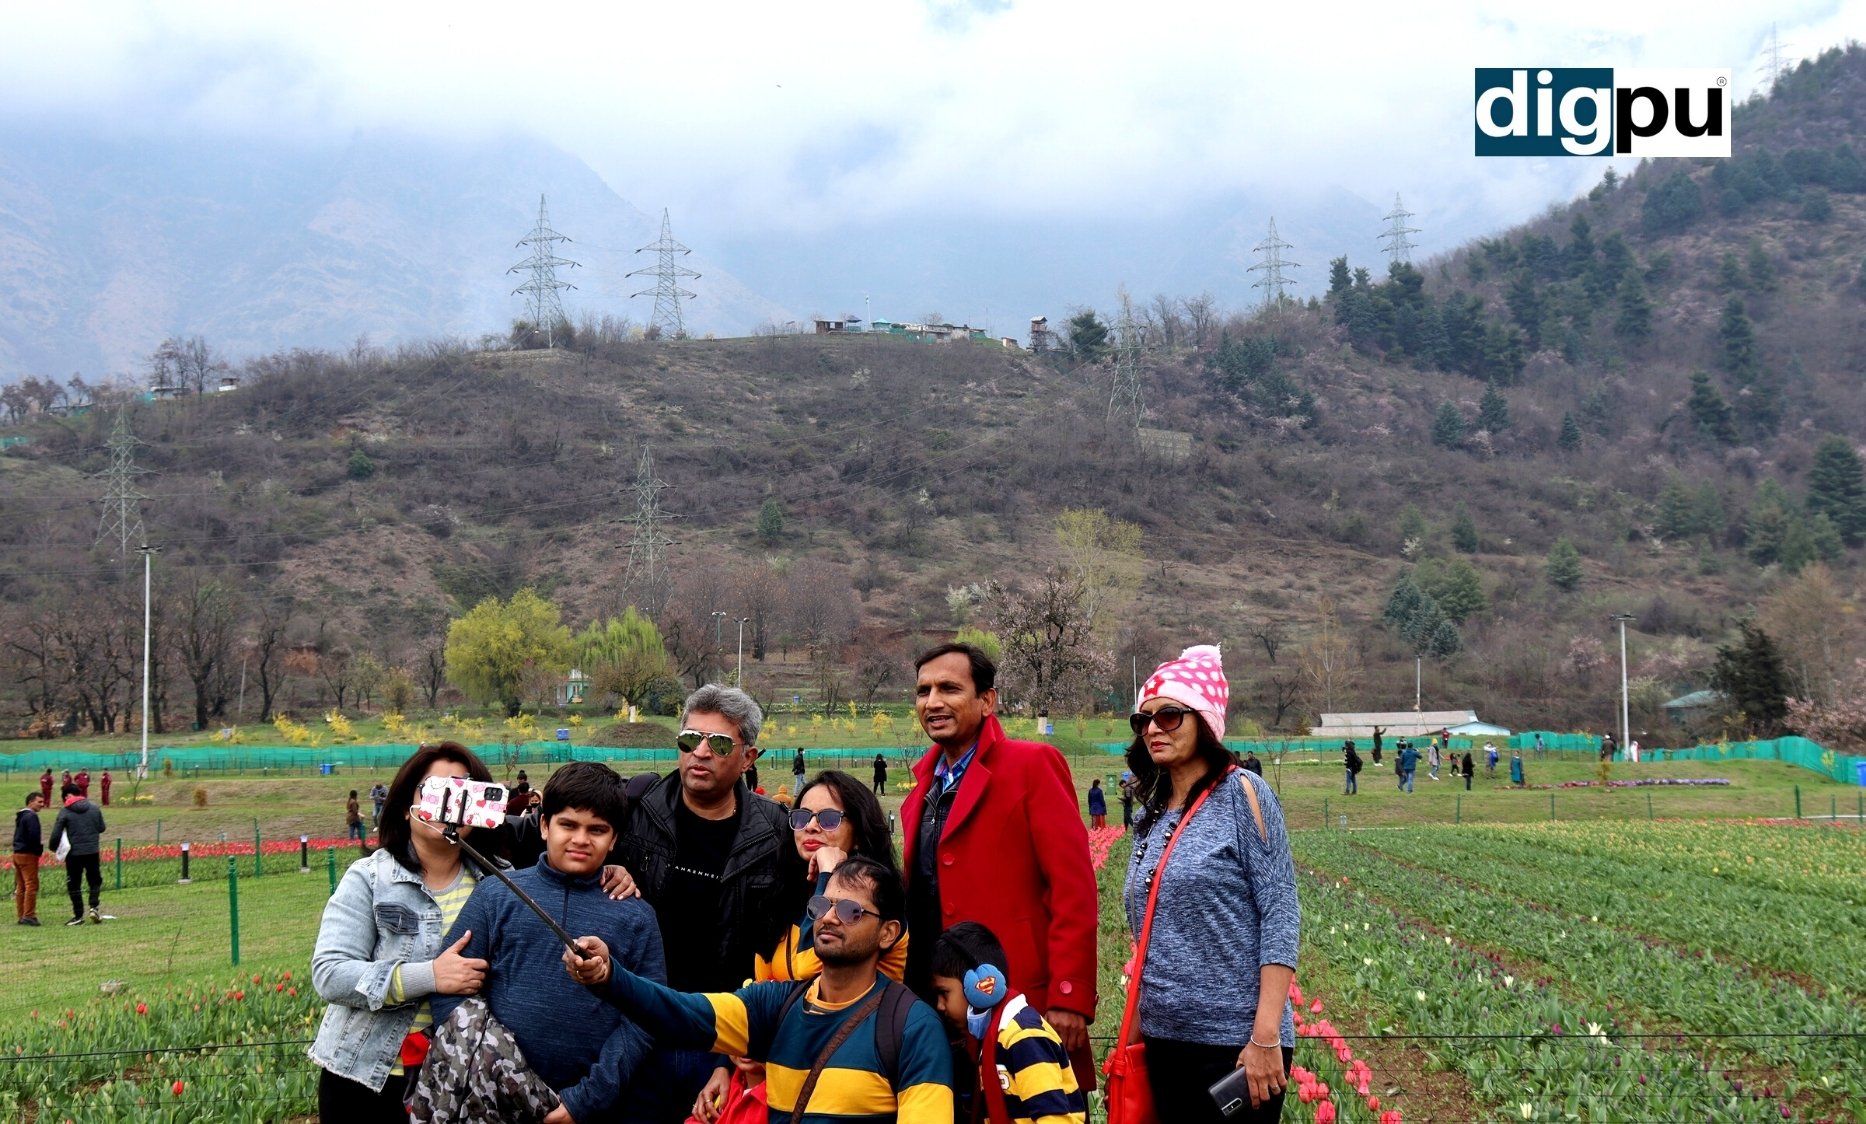 Tulip Garden opens in Srinagar after PM Modi calls it J&K’s ‘Special Day’ - Digpu News